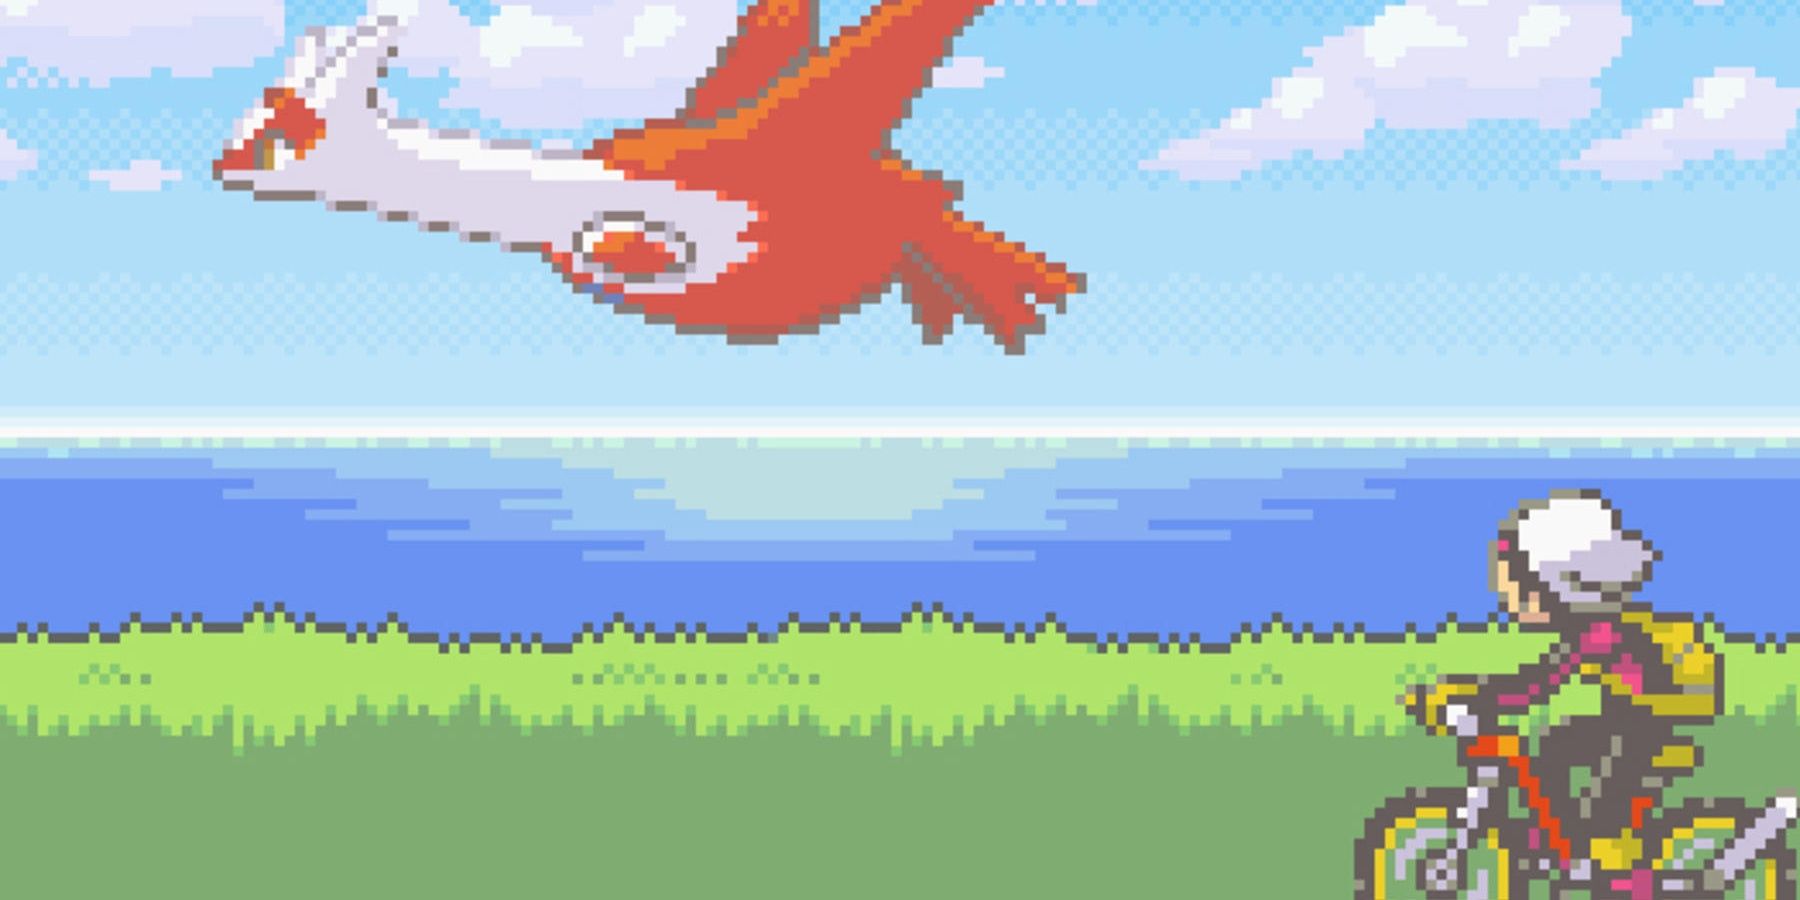 Pokemon Ruby And Sapphire cutscene of flying legendary Pokemon on the water